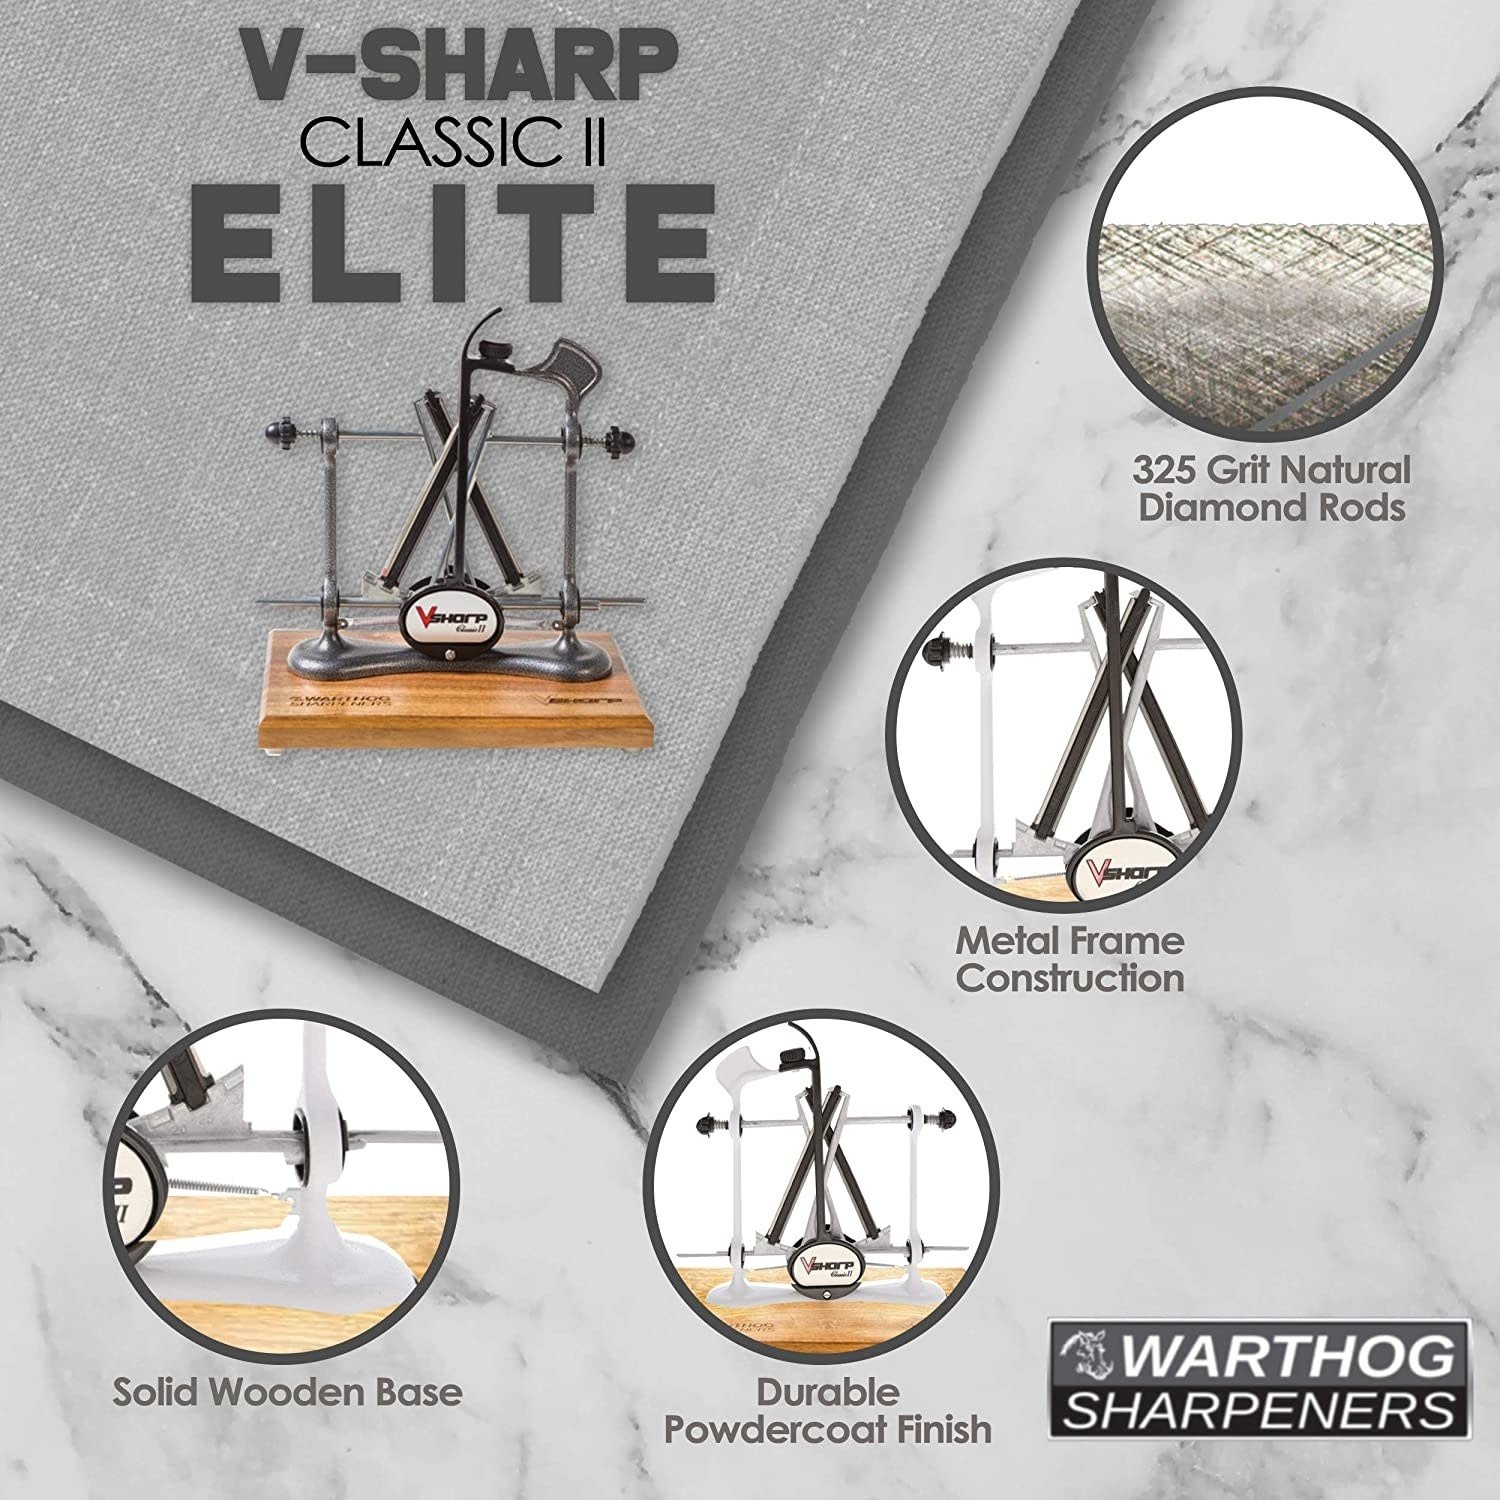 Warthog Sharpeners V-Sharp Xtreme Edge, Black - KnifeCenter